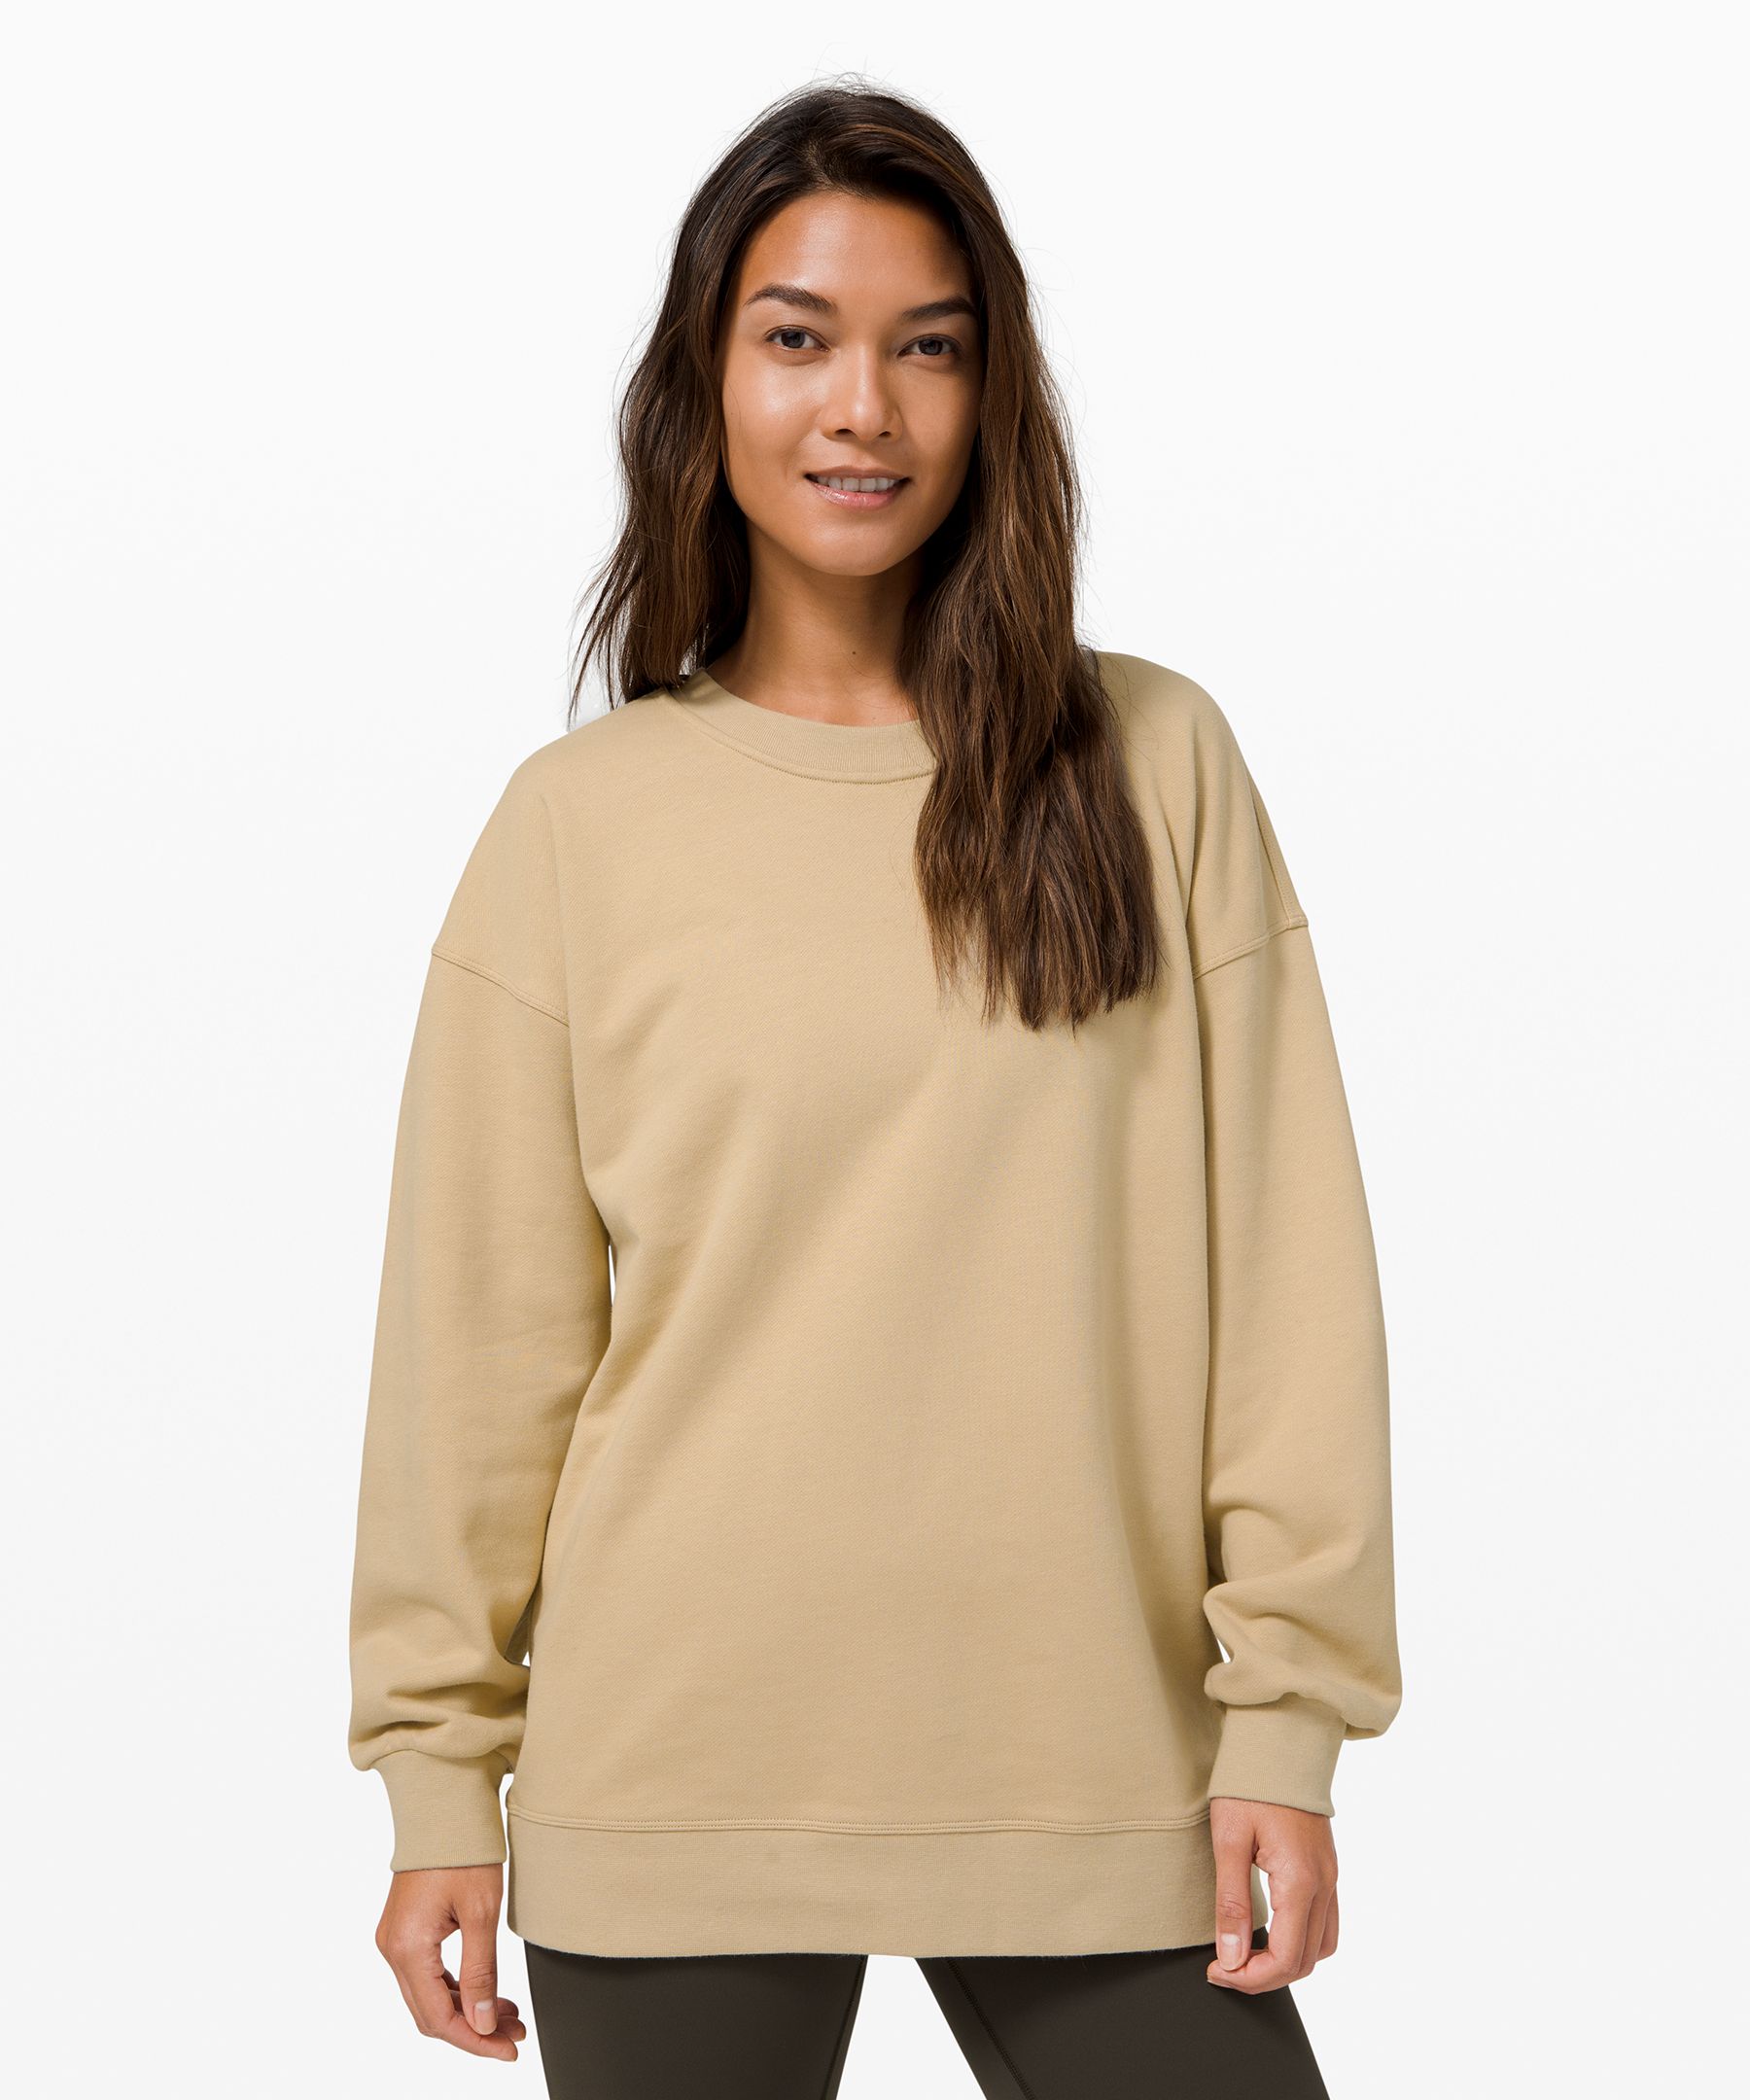 S-2XL imrusan Women Long Sleeve Crewneck Sweatshirt Color Block Pullover Tops